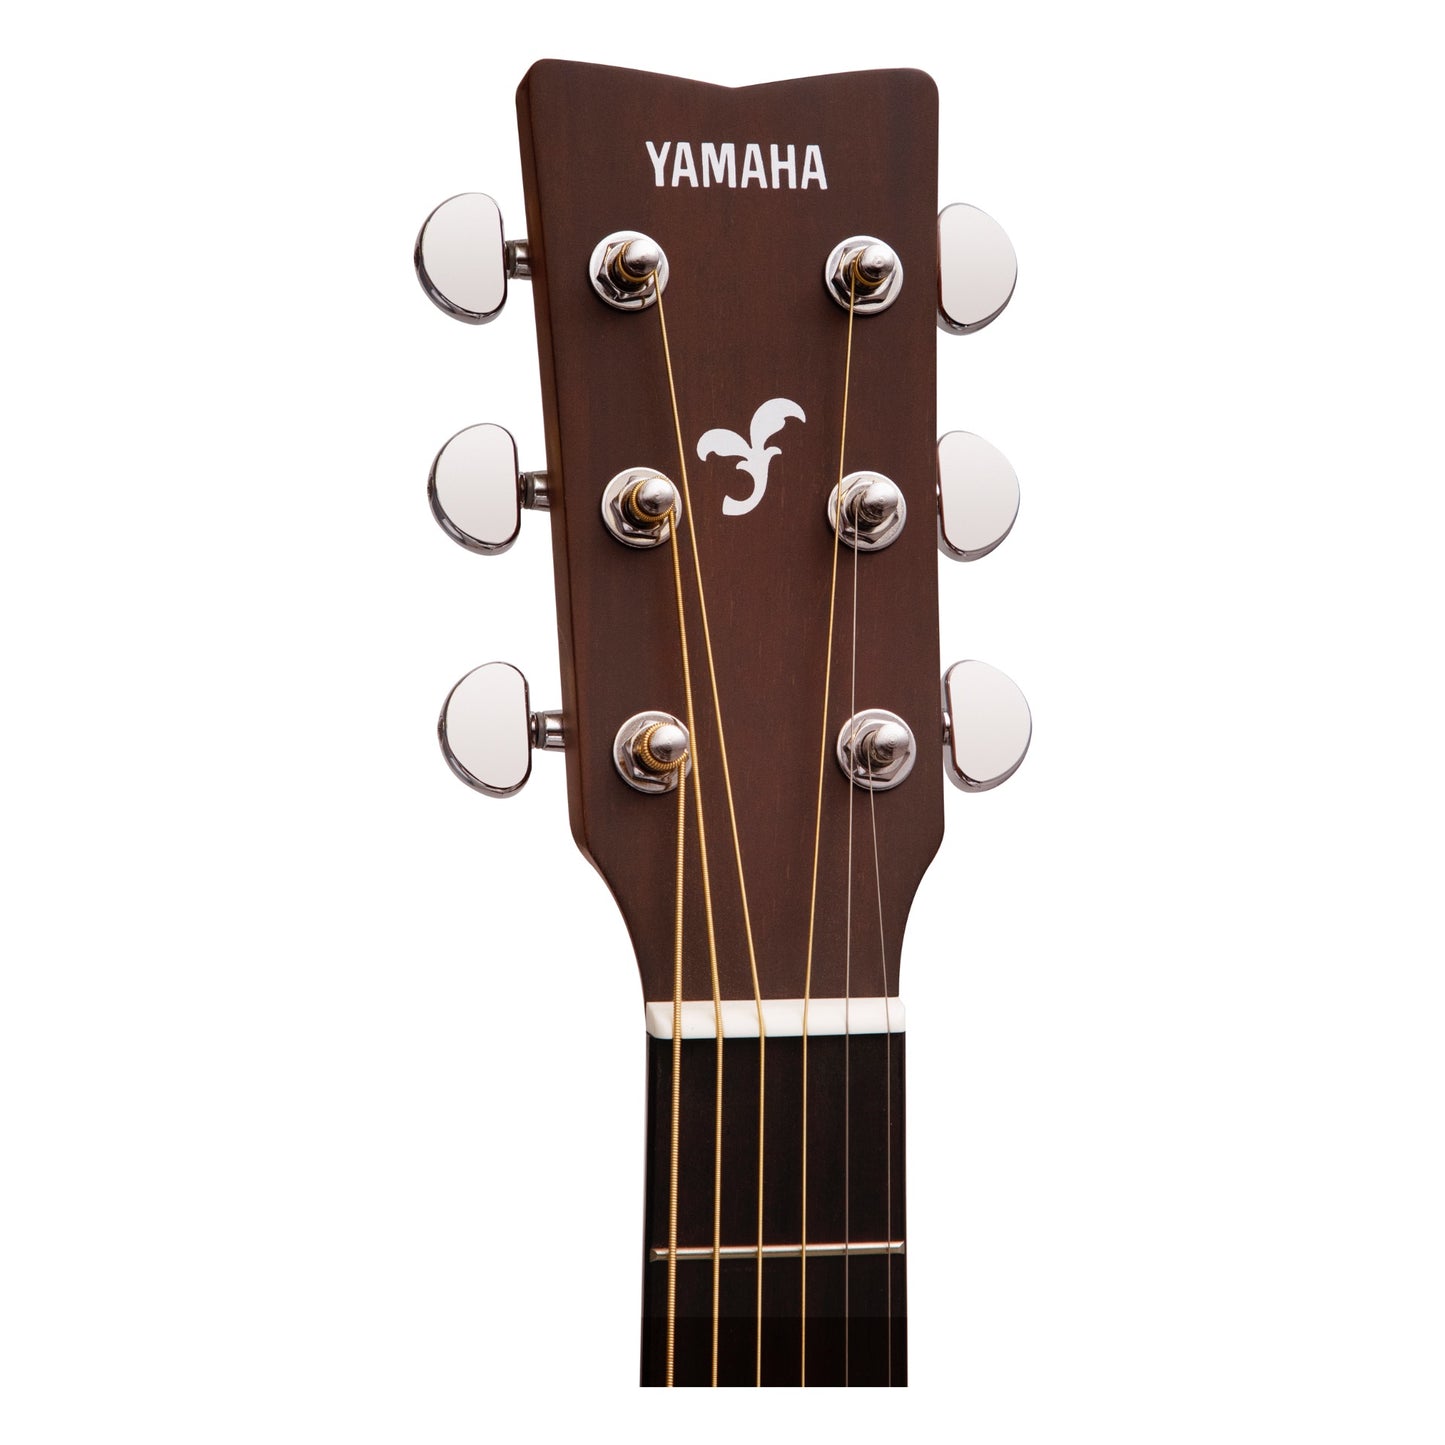 Yamaha FG800J Folk Solid Spruce Top Dreadnought Acoustic Guitar, Natural